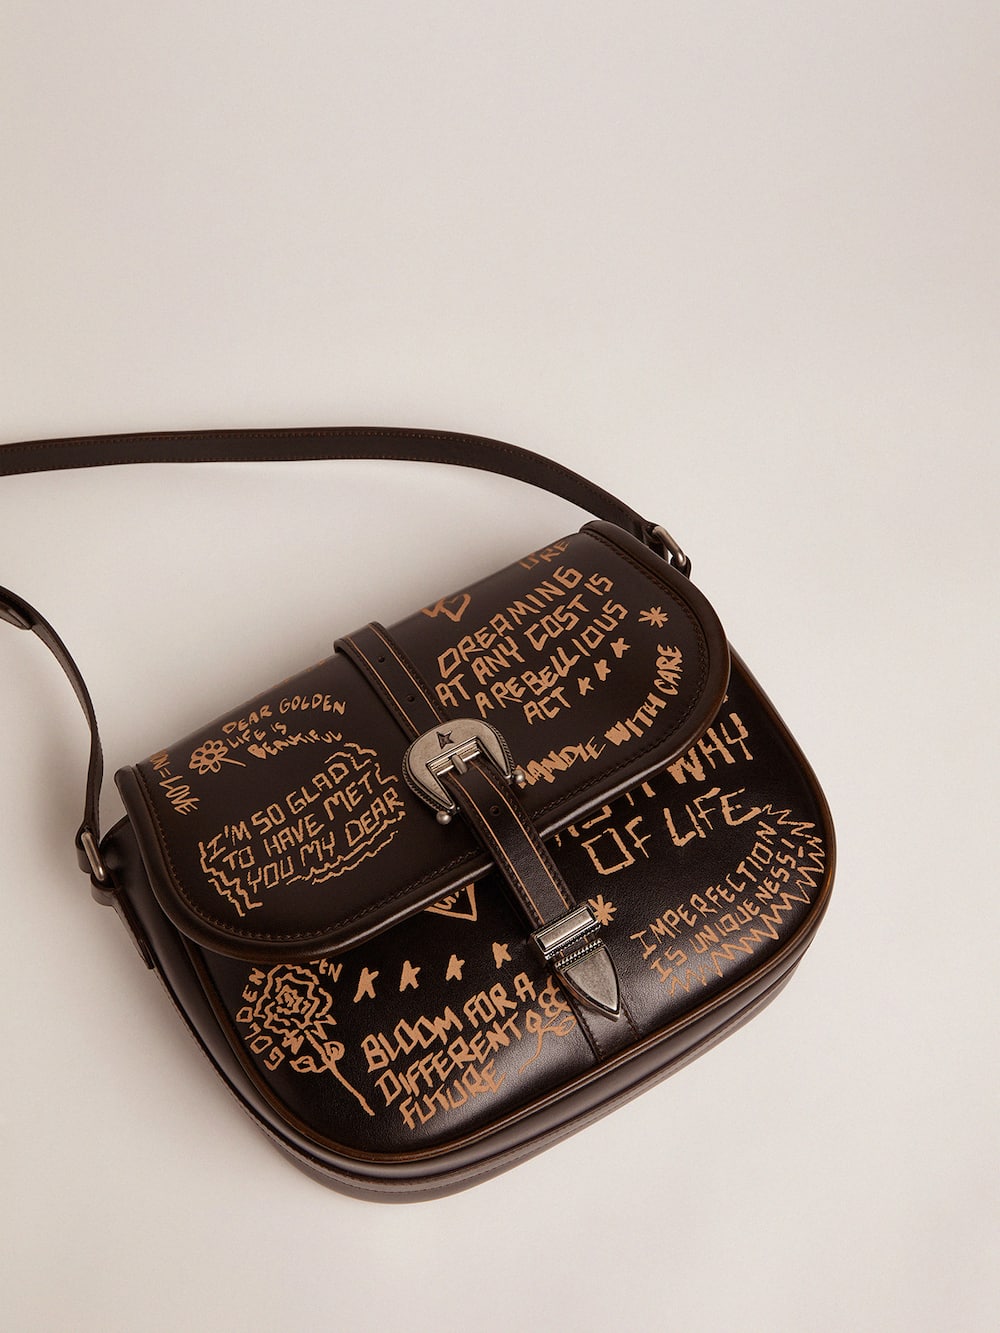 Golden Goose - Sac Rodeo Bag moyen en cuir noir avec inscriptions contrastées in 